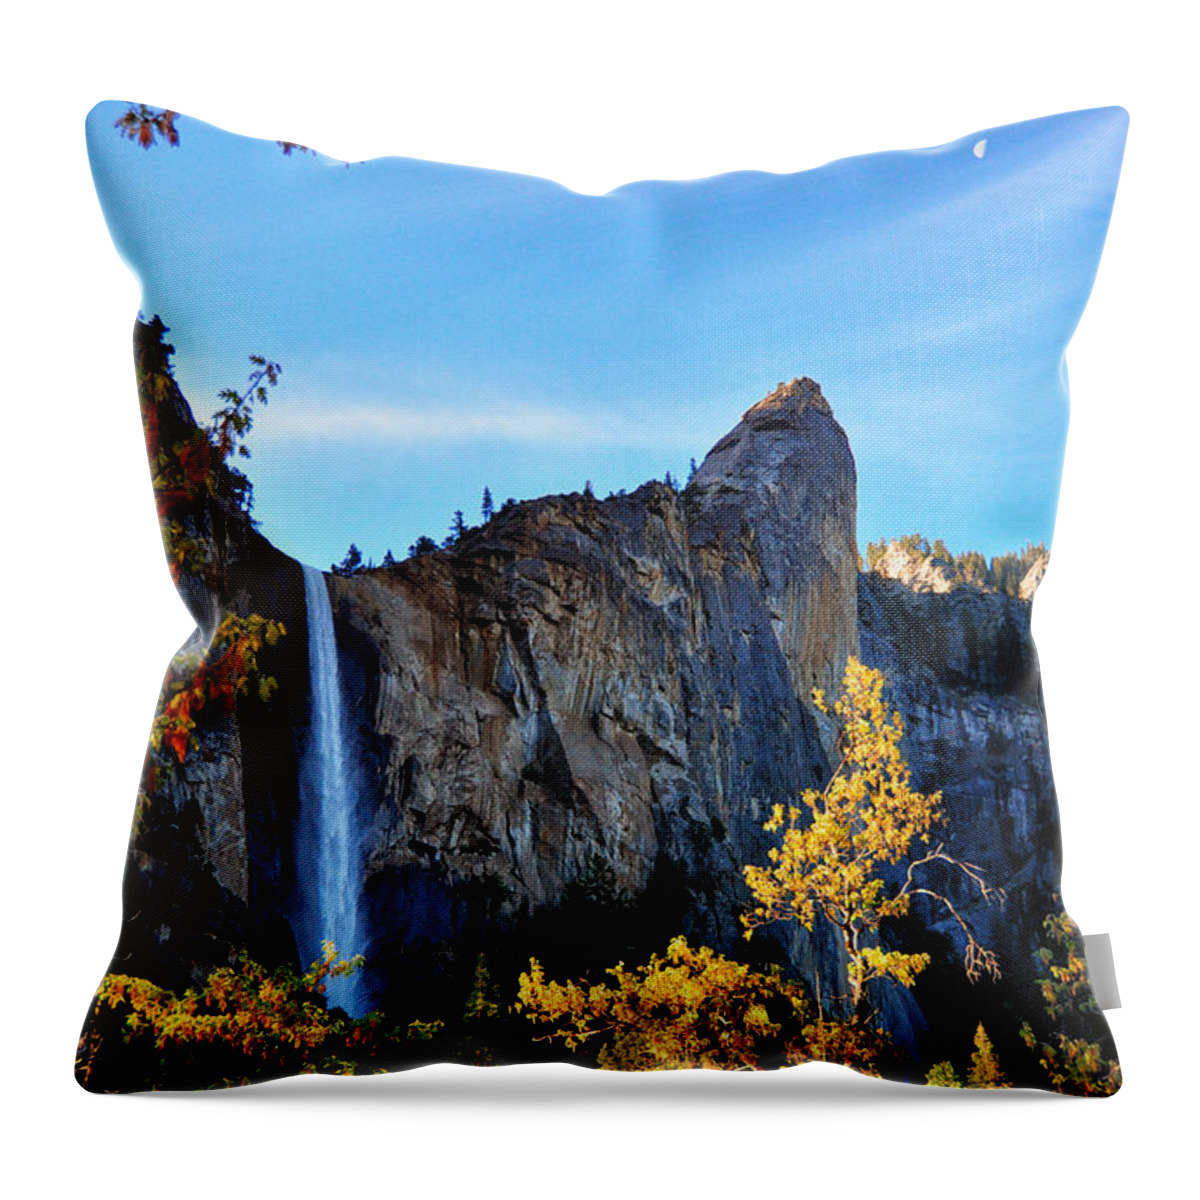 Yosemite Throw Pillow featuring the photograph Bridleveil Falls - Yosemite National Park - California by Bruce Friedman